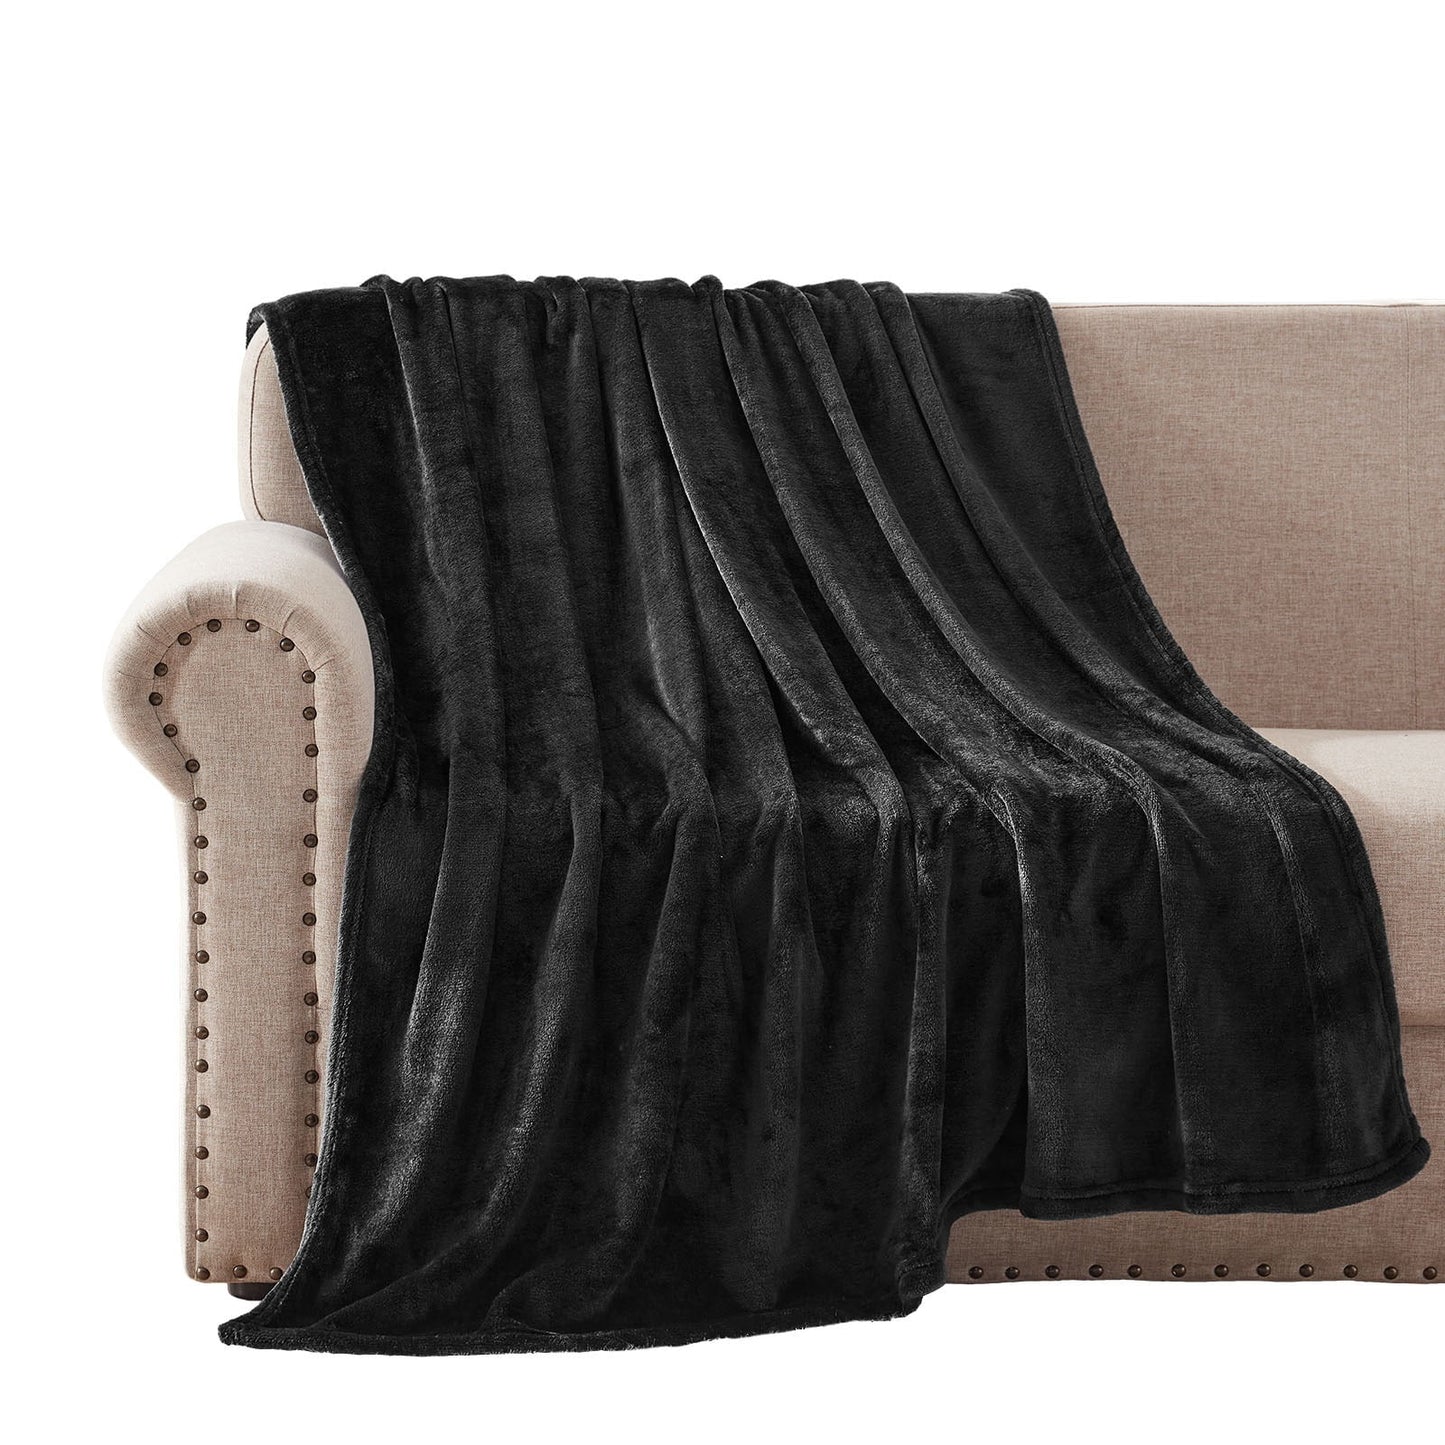 Exclusivo Mezcla Large Flannel Fleece Velvet Plush Throw Blanket - 50" x 60" (Black)